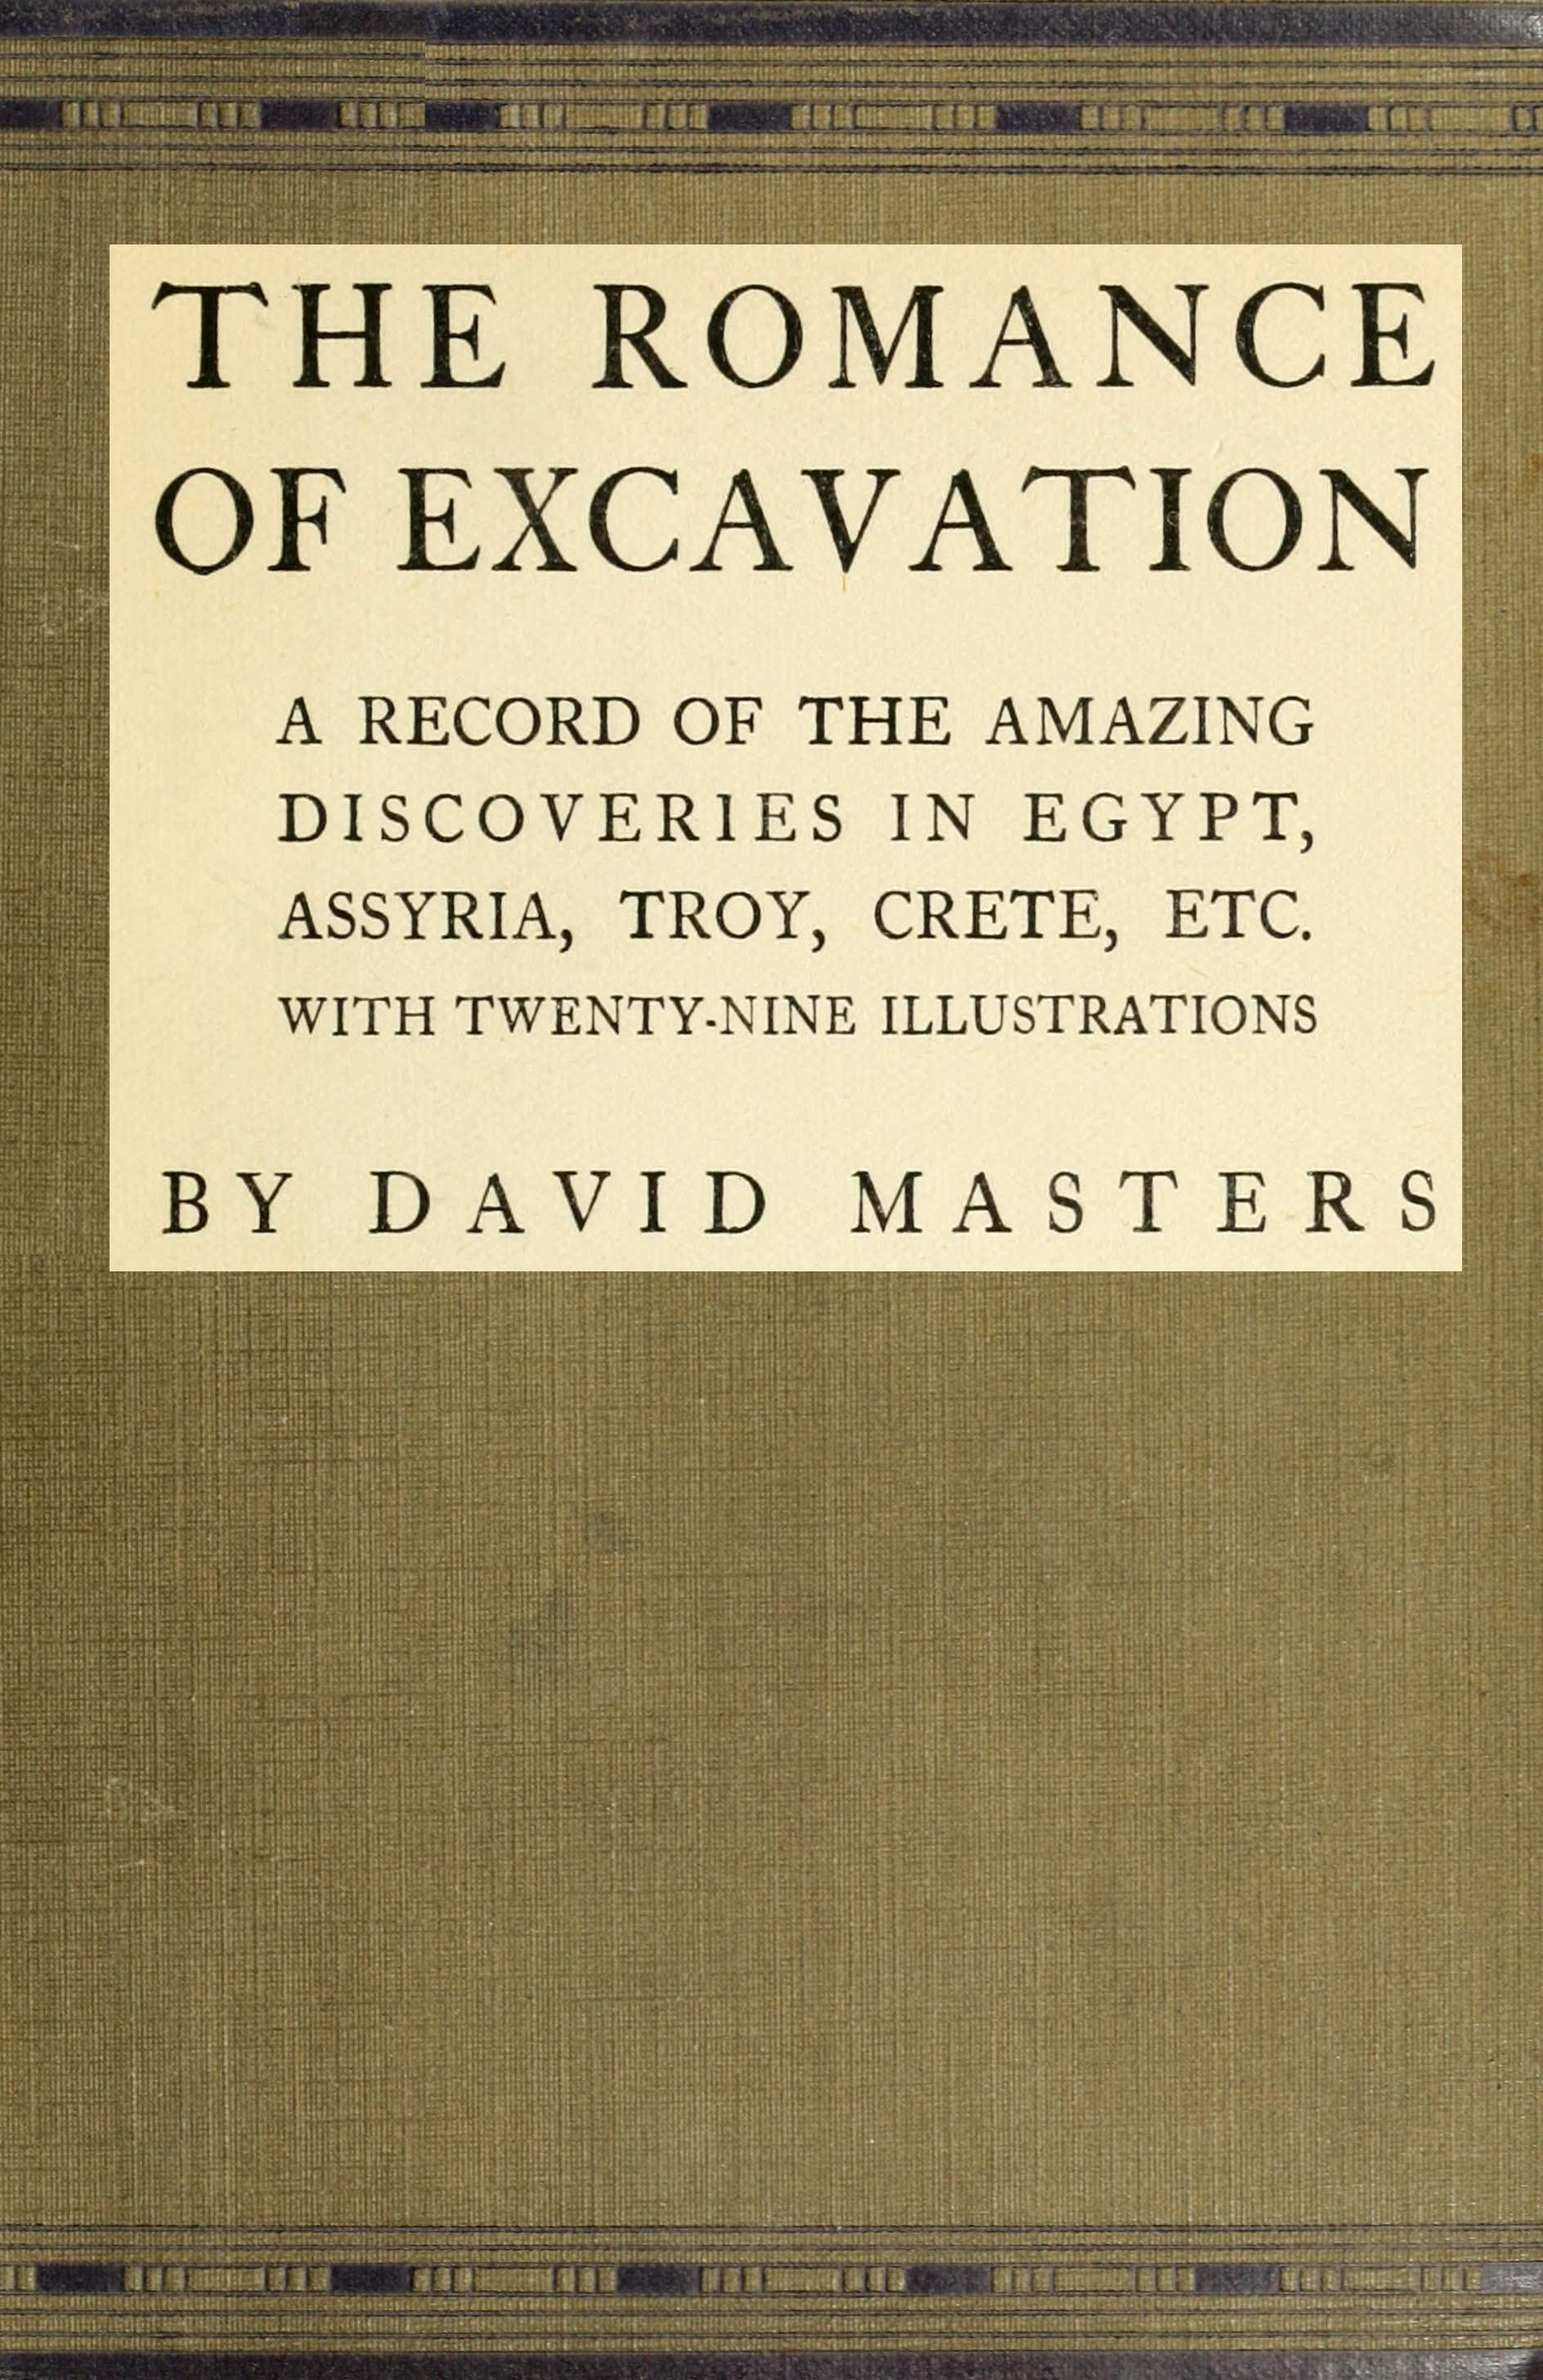 The romance of excavation